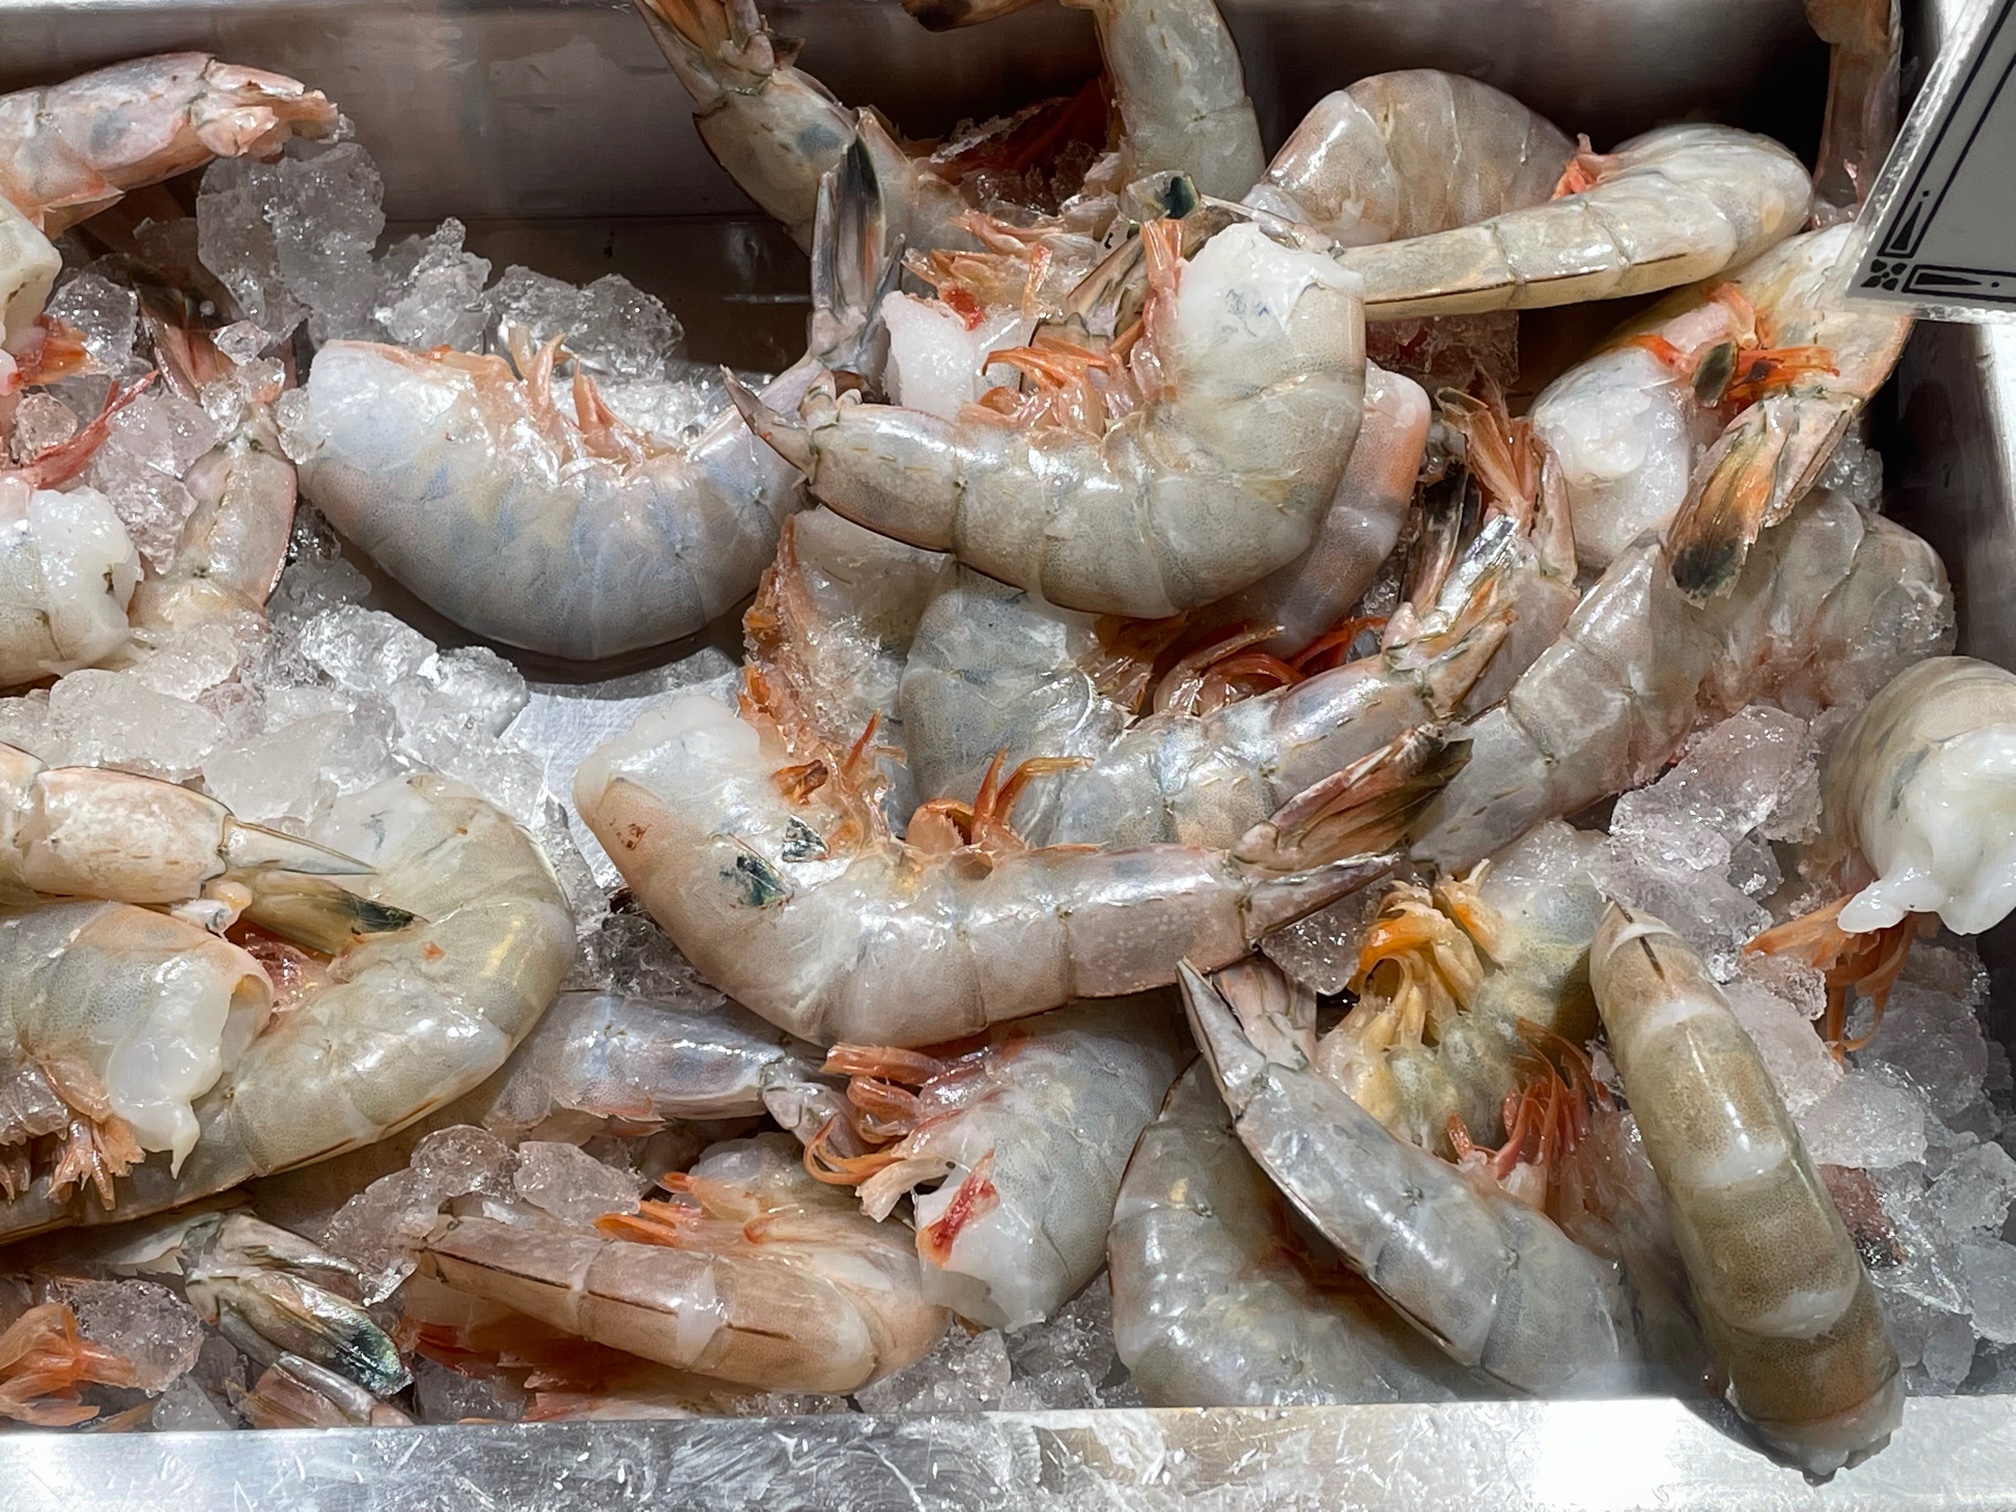 Dozens of frozen shrimp on ice